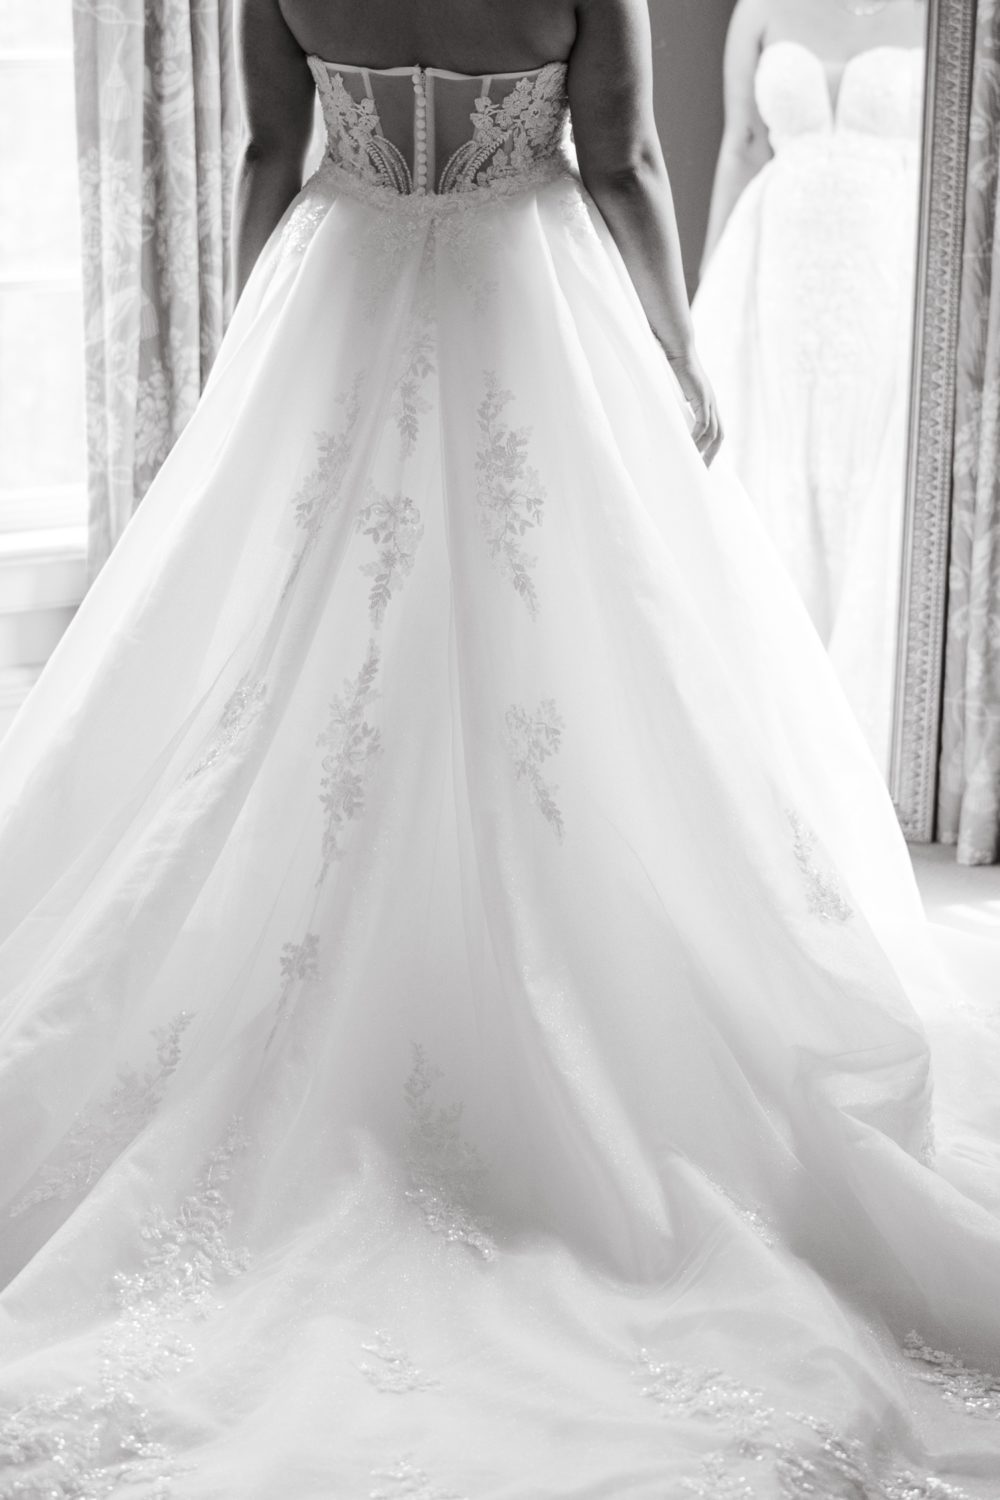 black and white bride wedding dress details